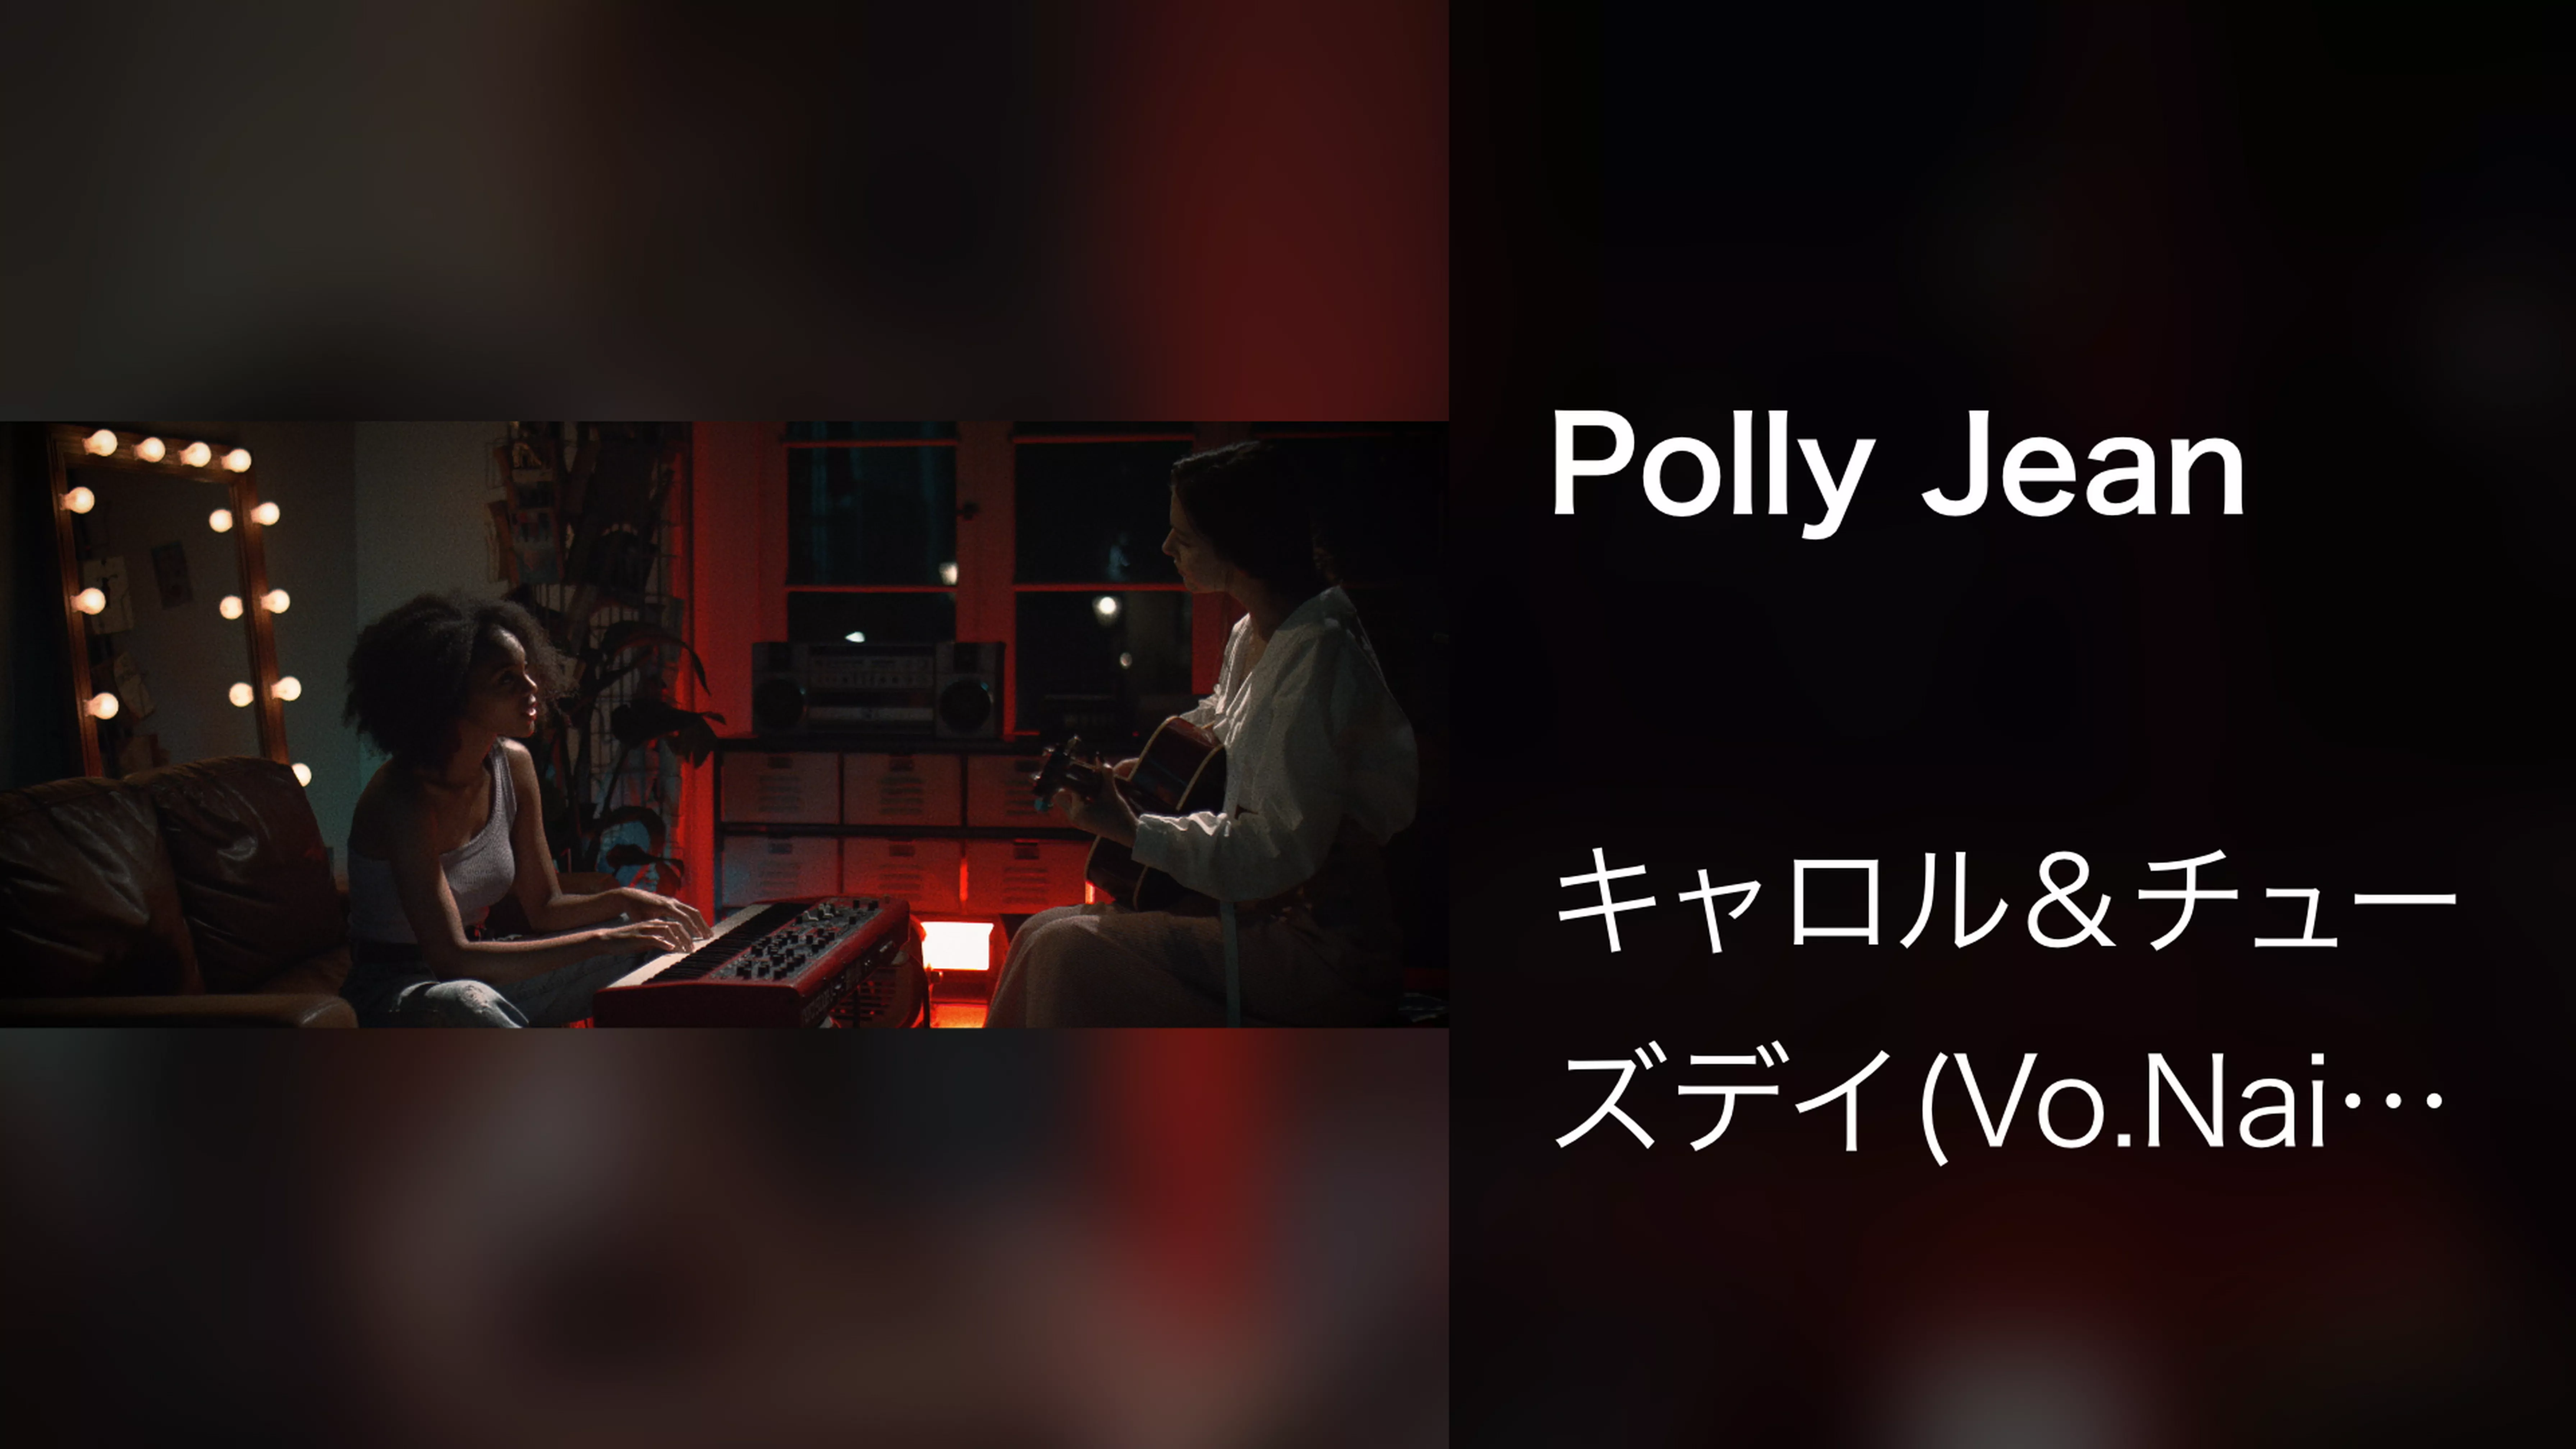 Polly Jean